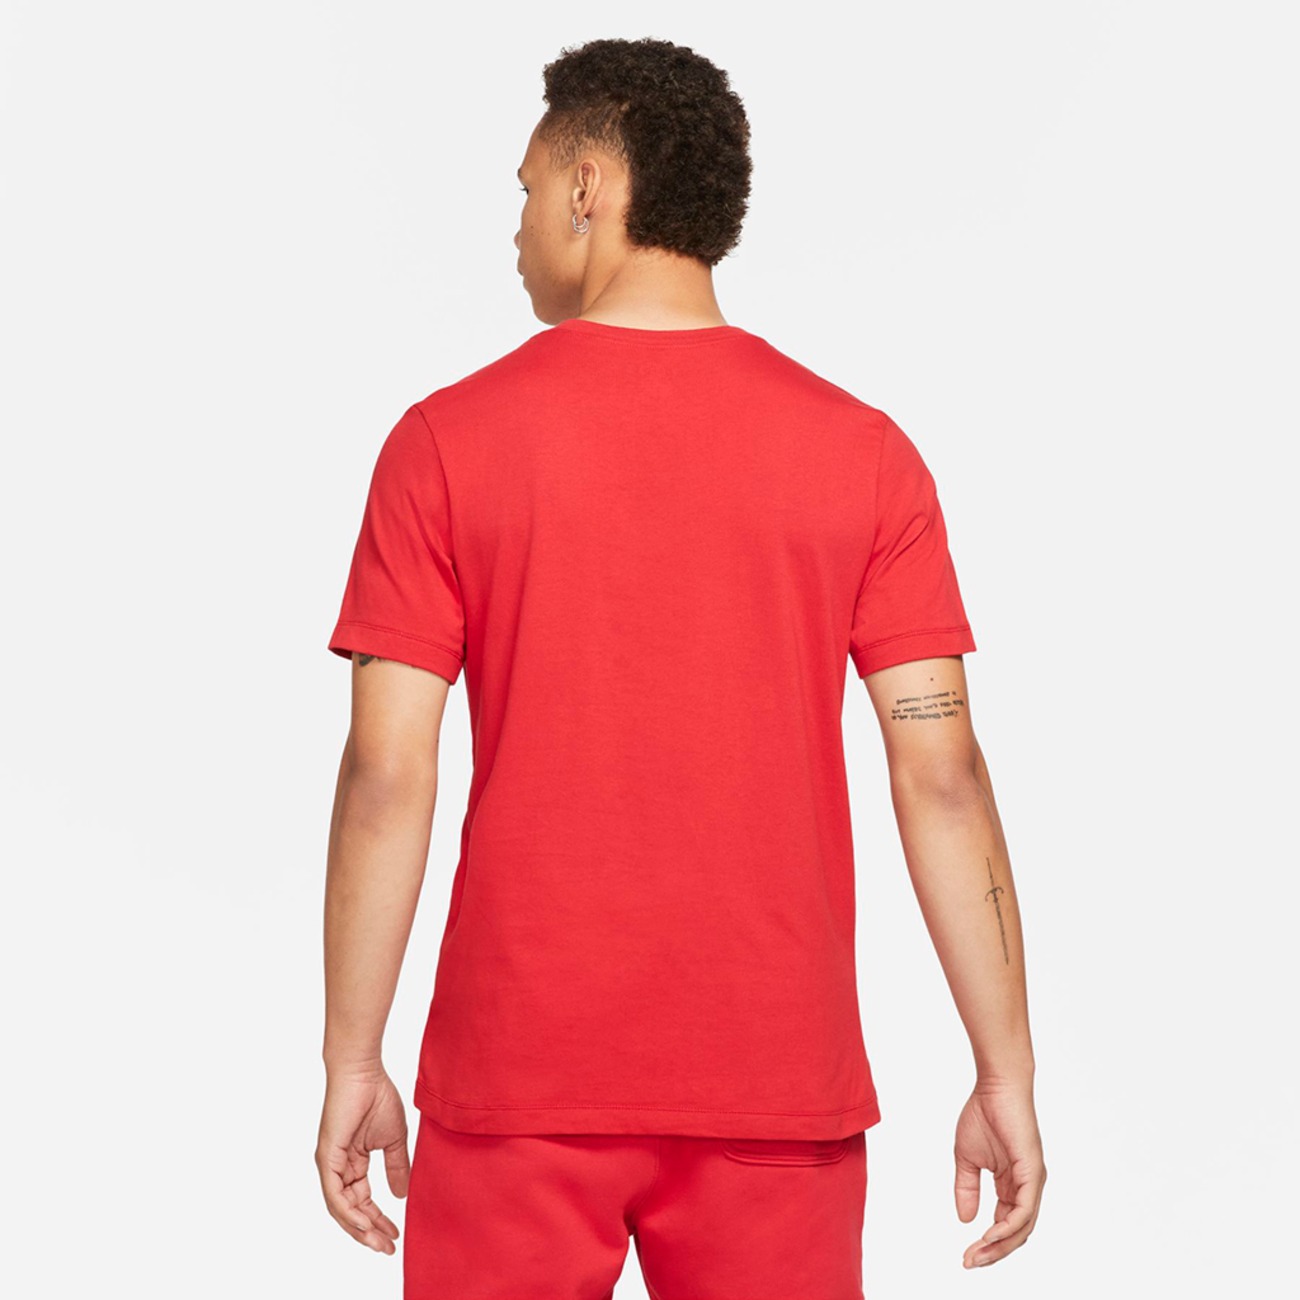 Camiseta Jordan Jumpman Masculina - Foto 2